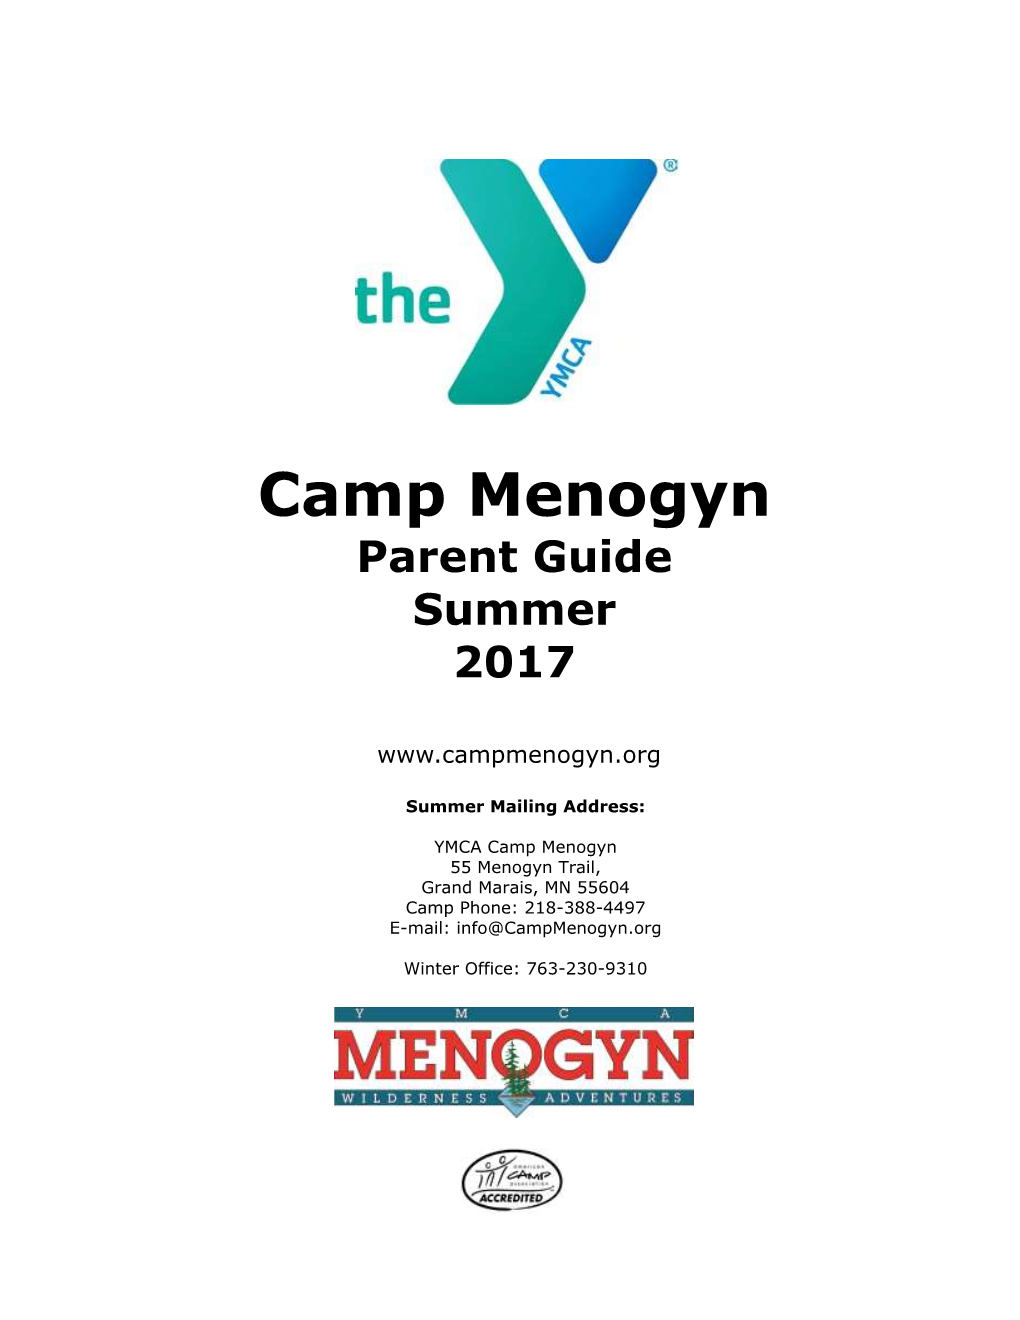 Camp Menogyn Parent Guide Summer 2017